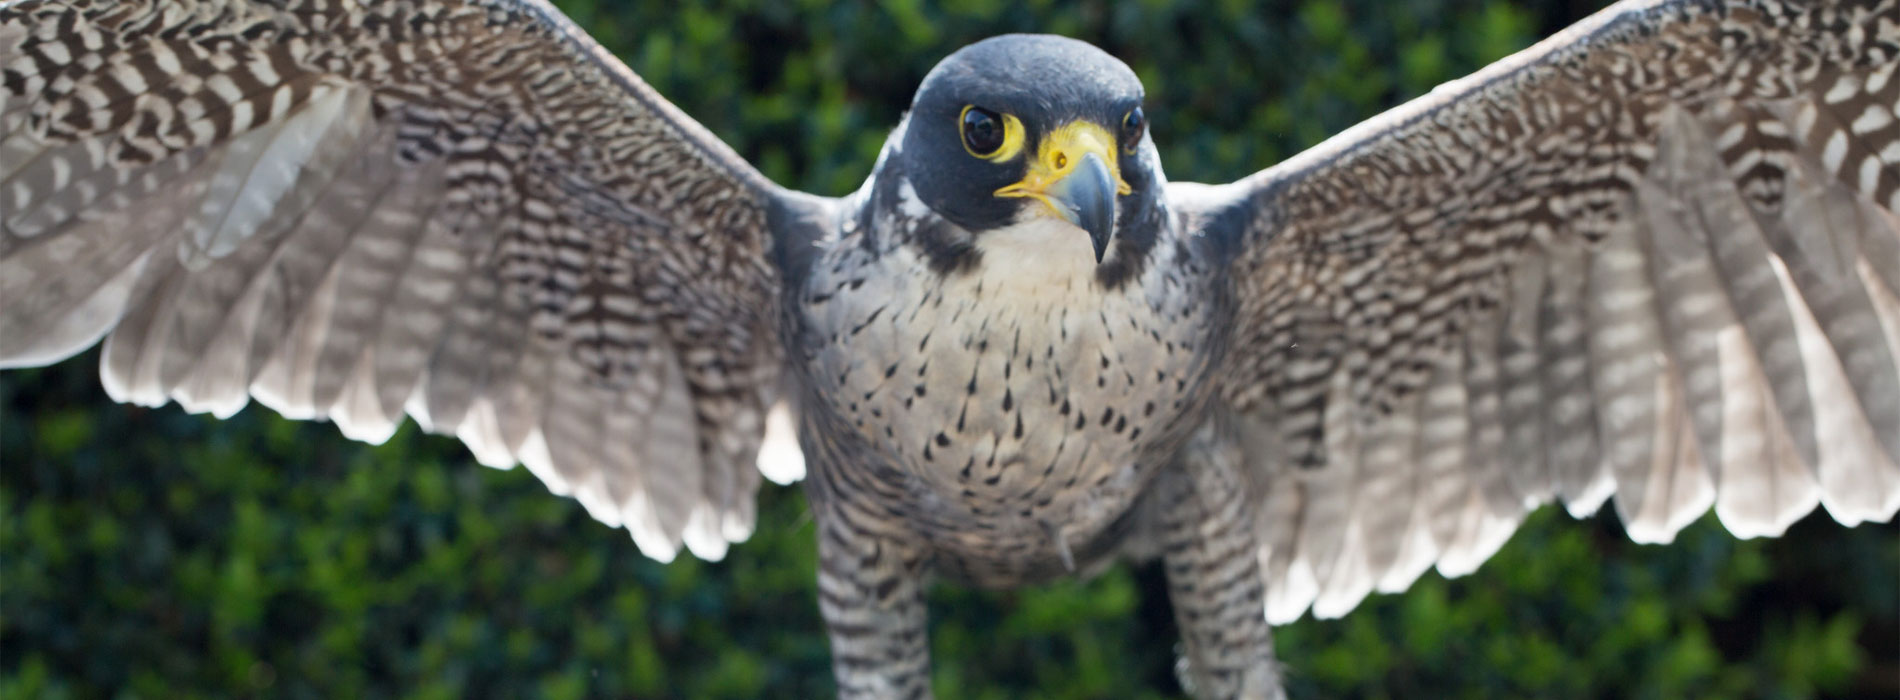 Falcon wingspan